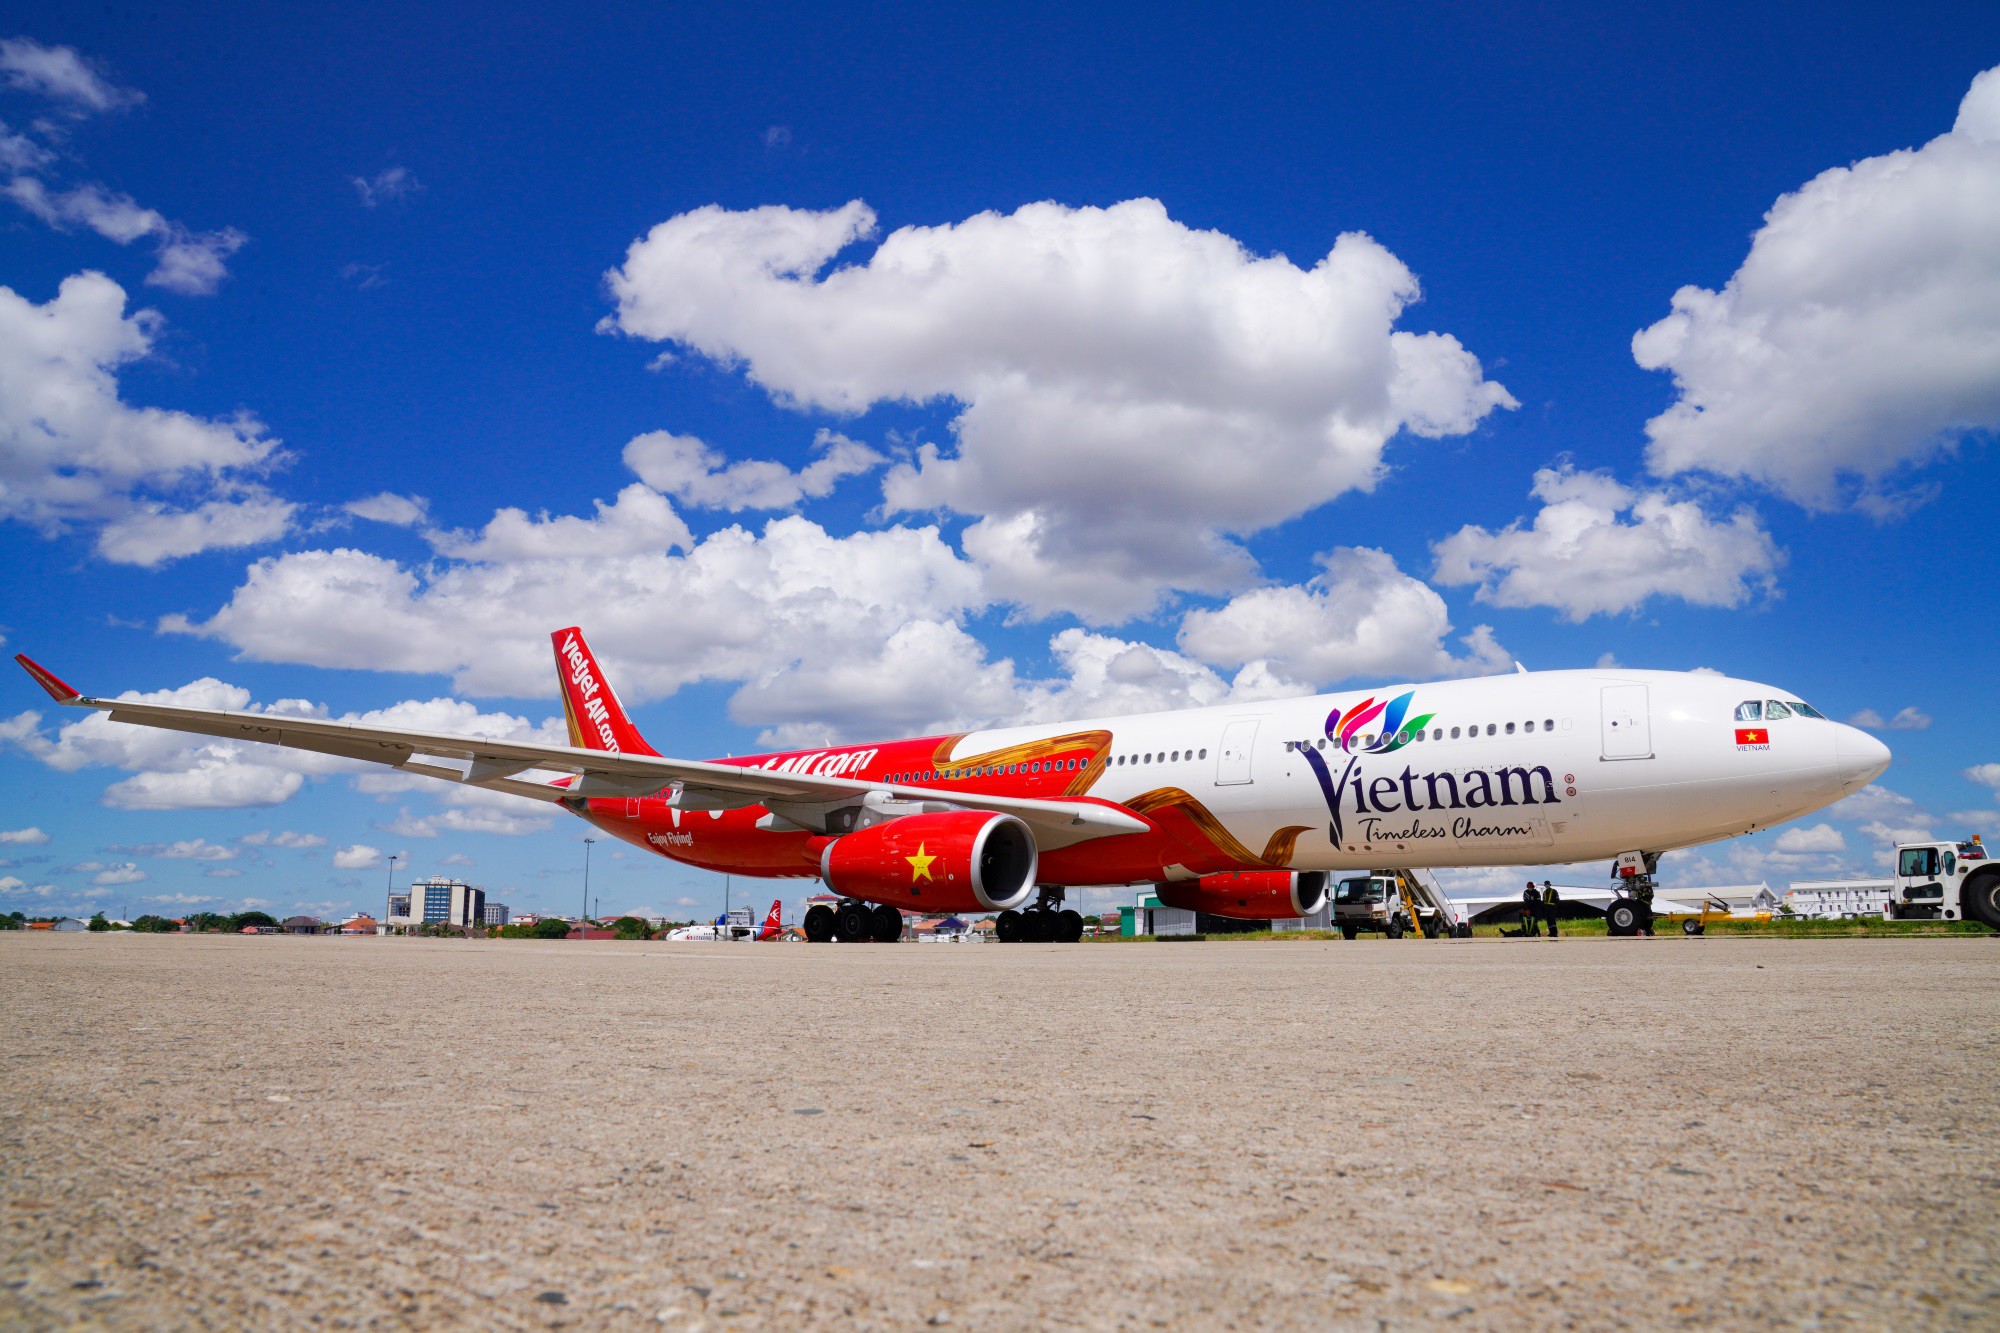 Thỏa sức khám phá Australia cùng Vietjet với 48 chuyến bay/ tuần đến Brisbane, Melbourne, Sydney, Perth, Adelaide - 1